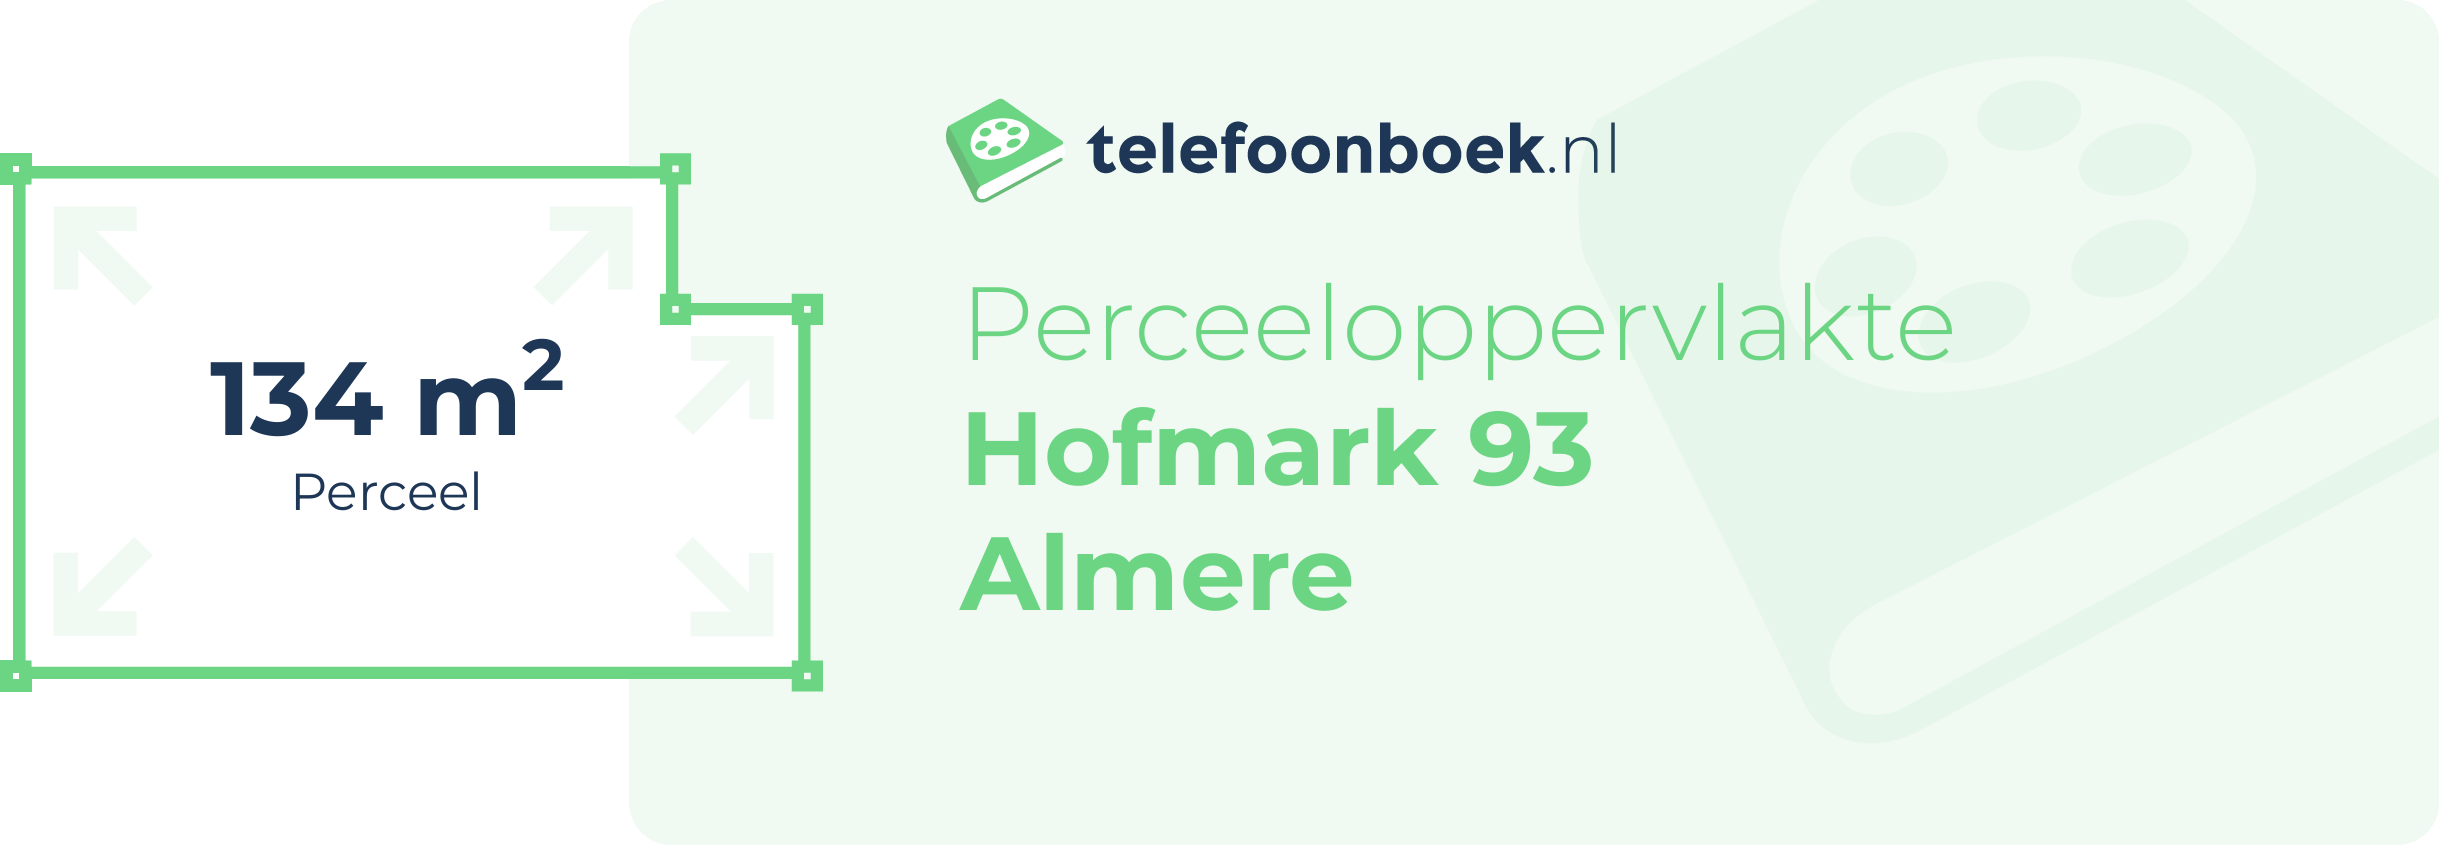 Perceeloppervlakte Hofmark 93 Almere